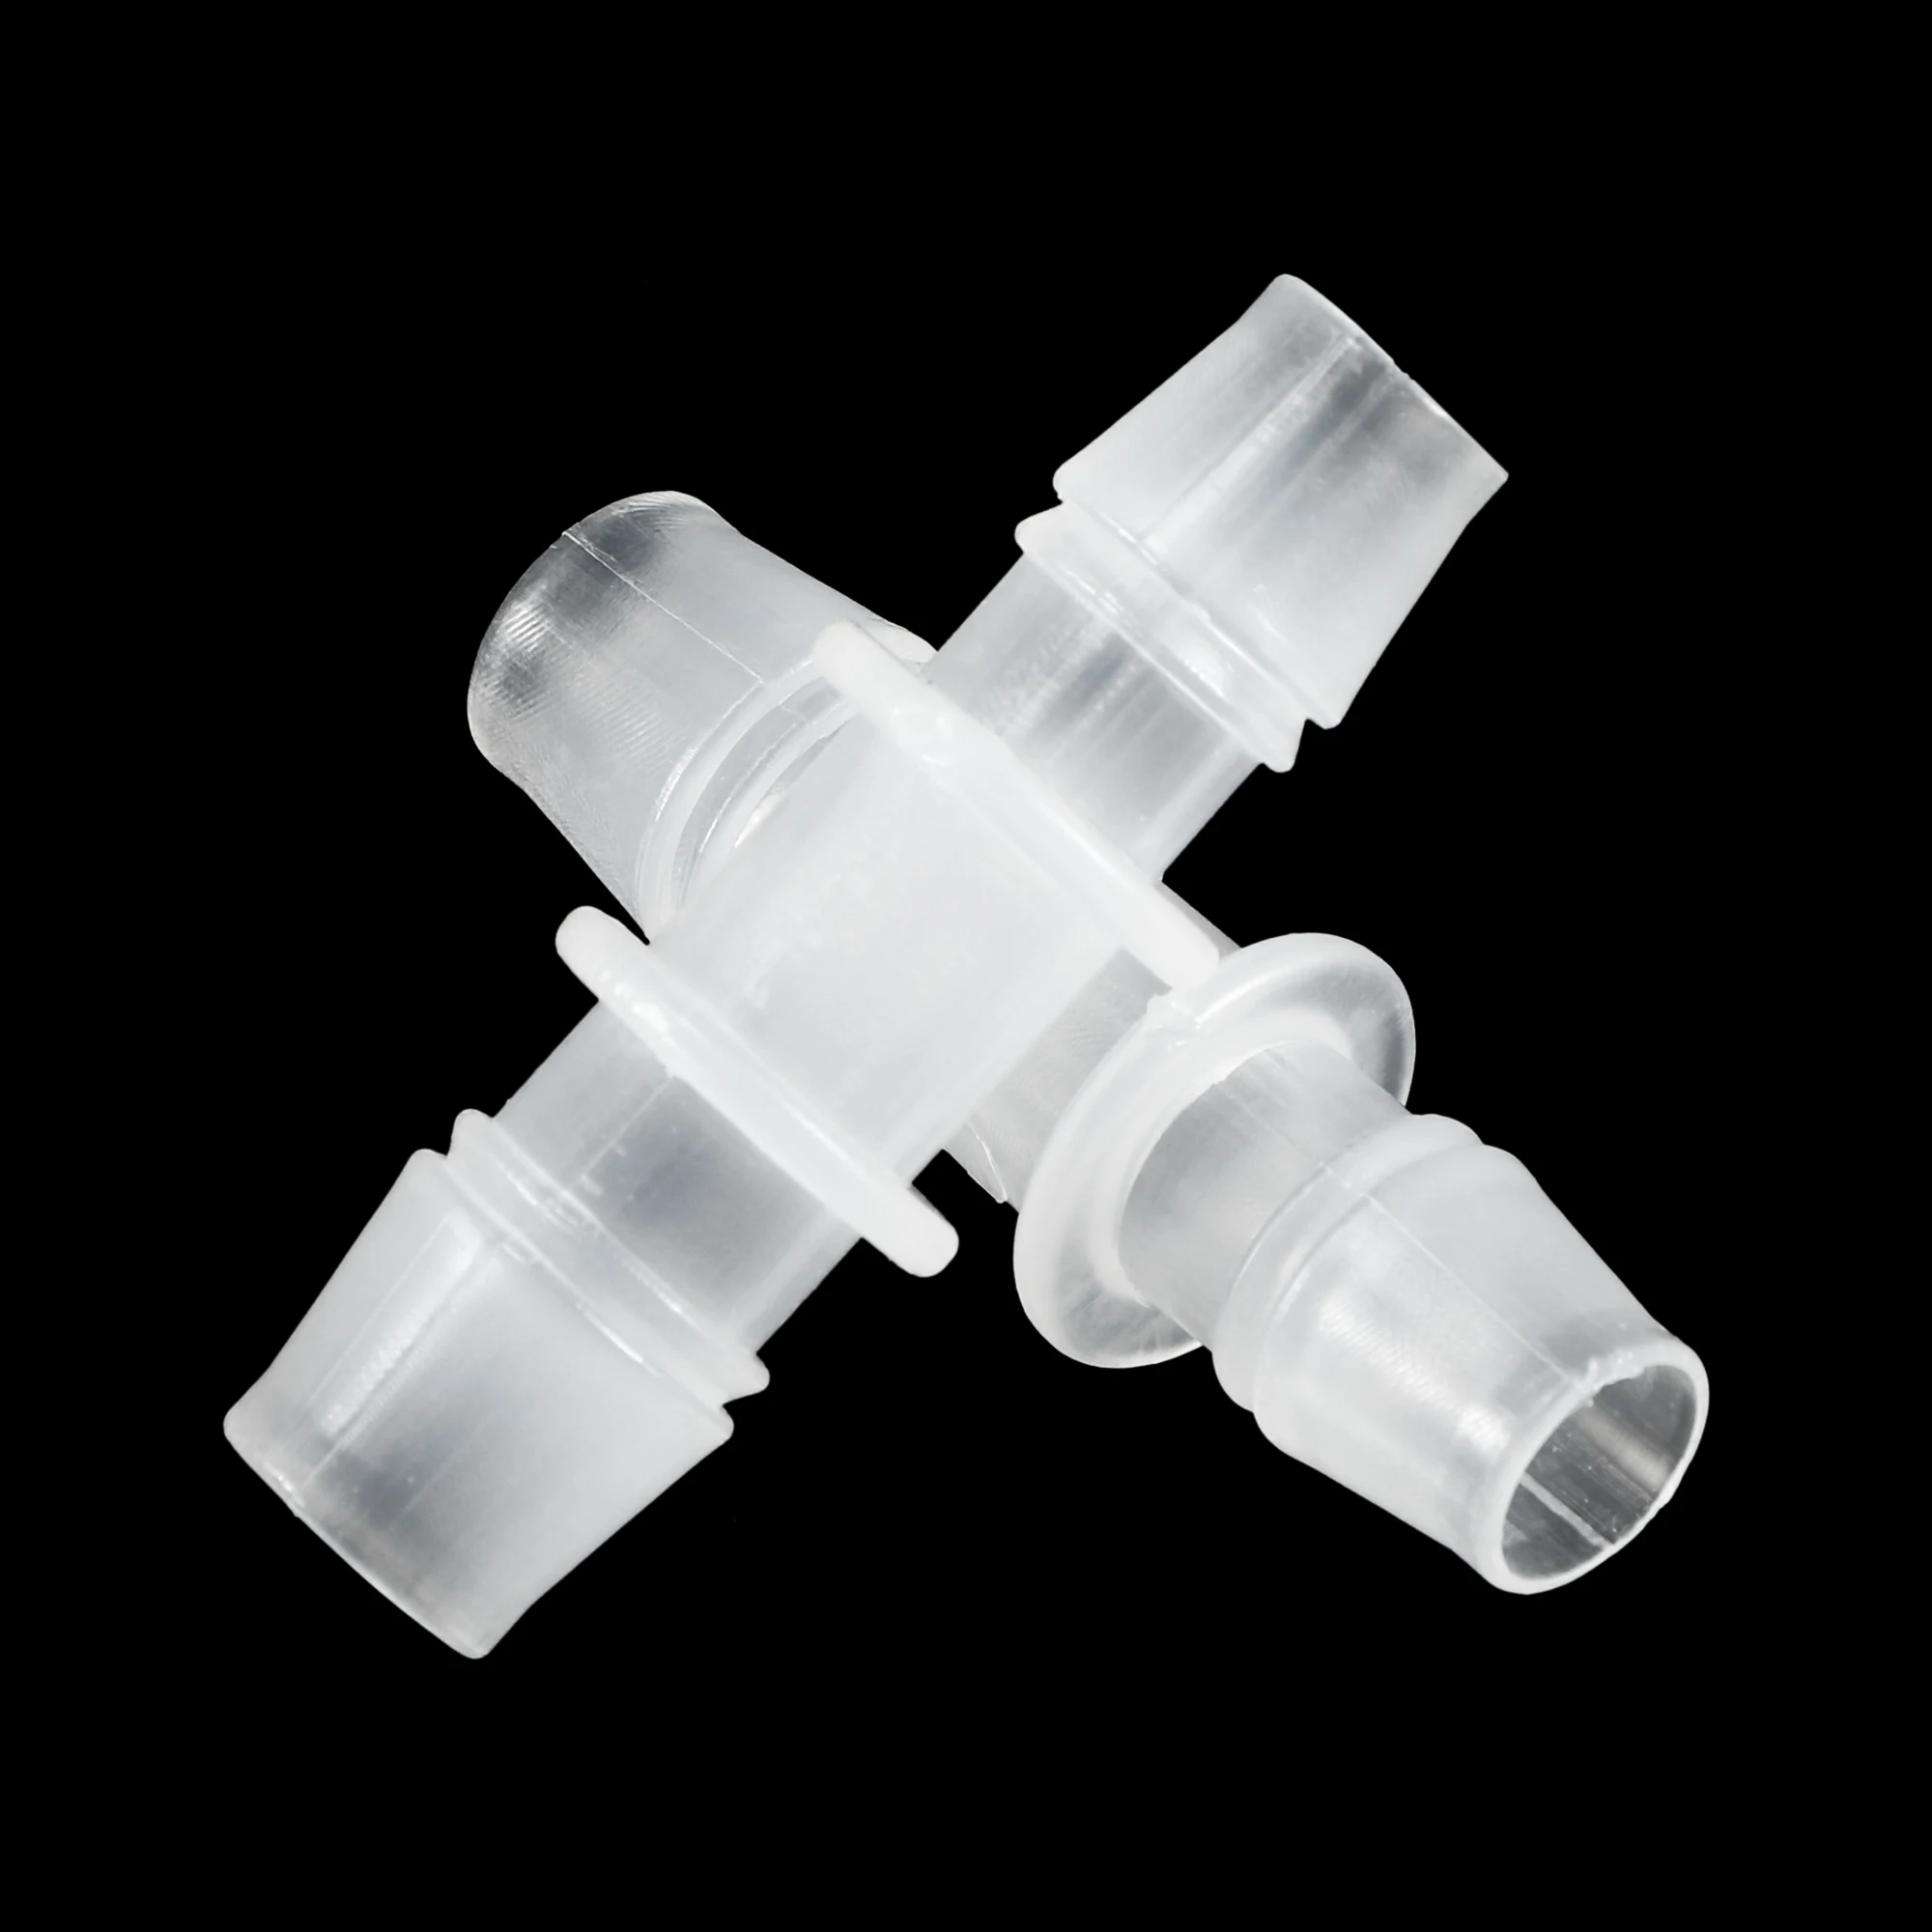 X Autohaux 4 бр., I-образен маркуч, зазубренная тръба, фитинг от полипропилен, полупрозрачни за автомобилни шланговых конектор